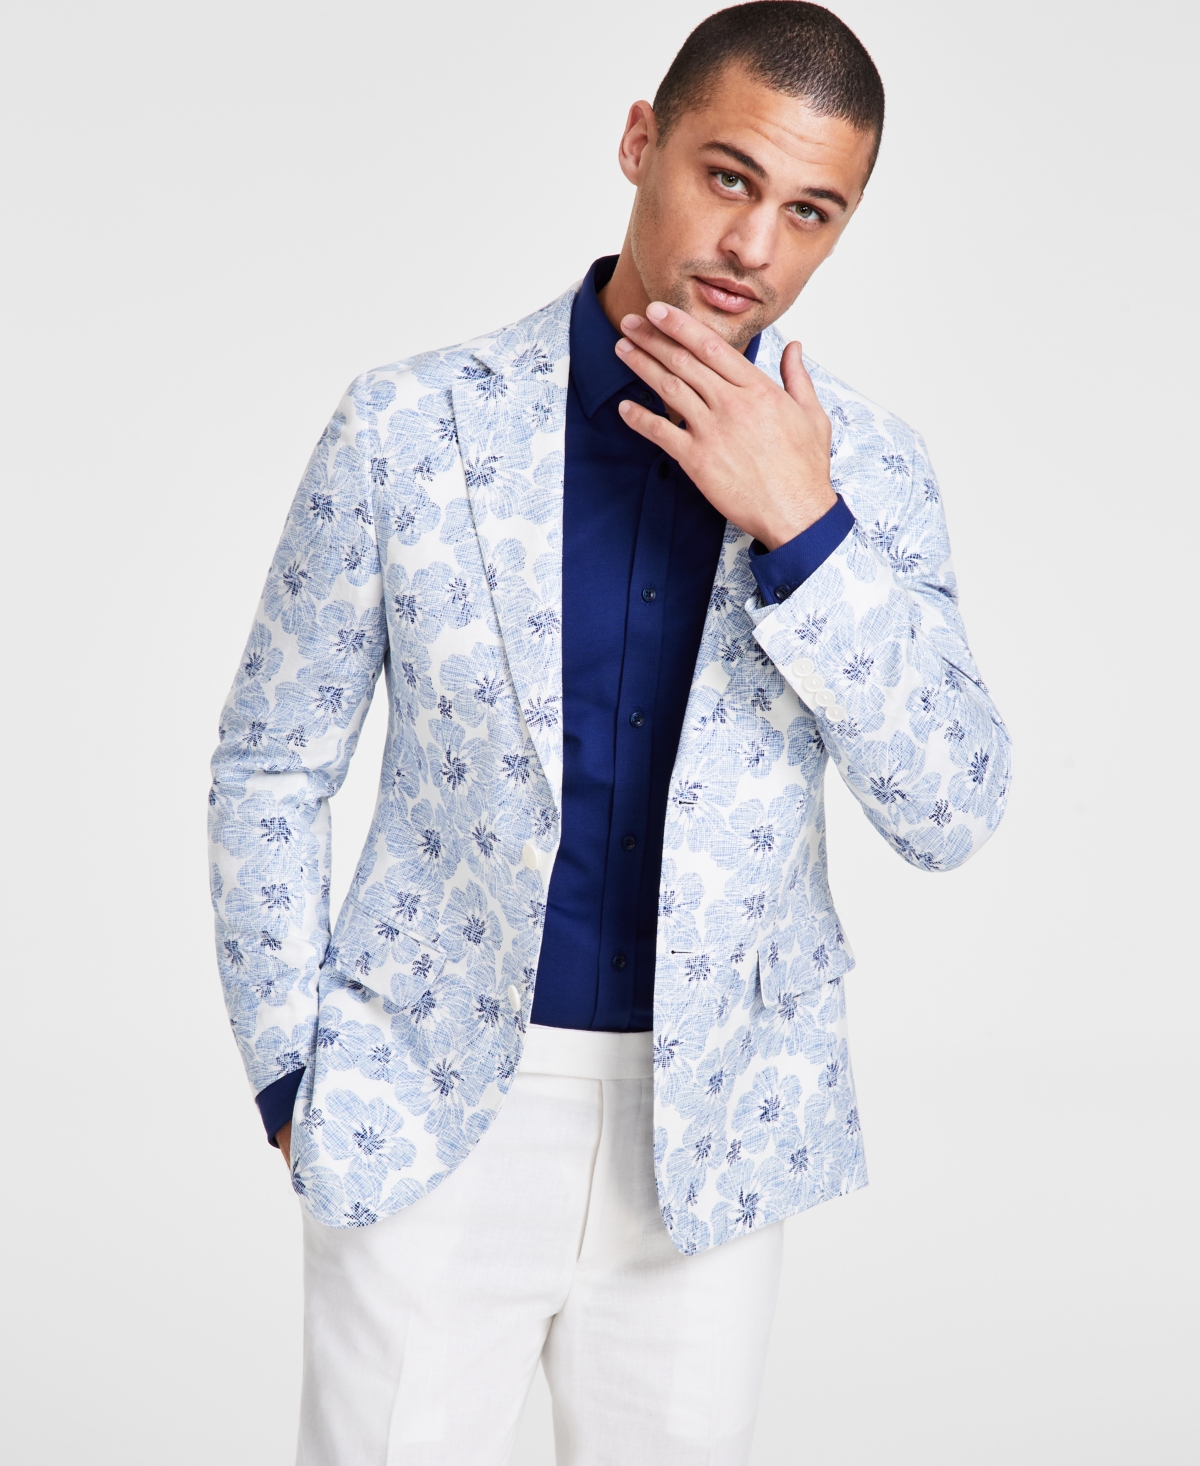 Men's Slim-Fit White Floral Sport Coat - Blue White